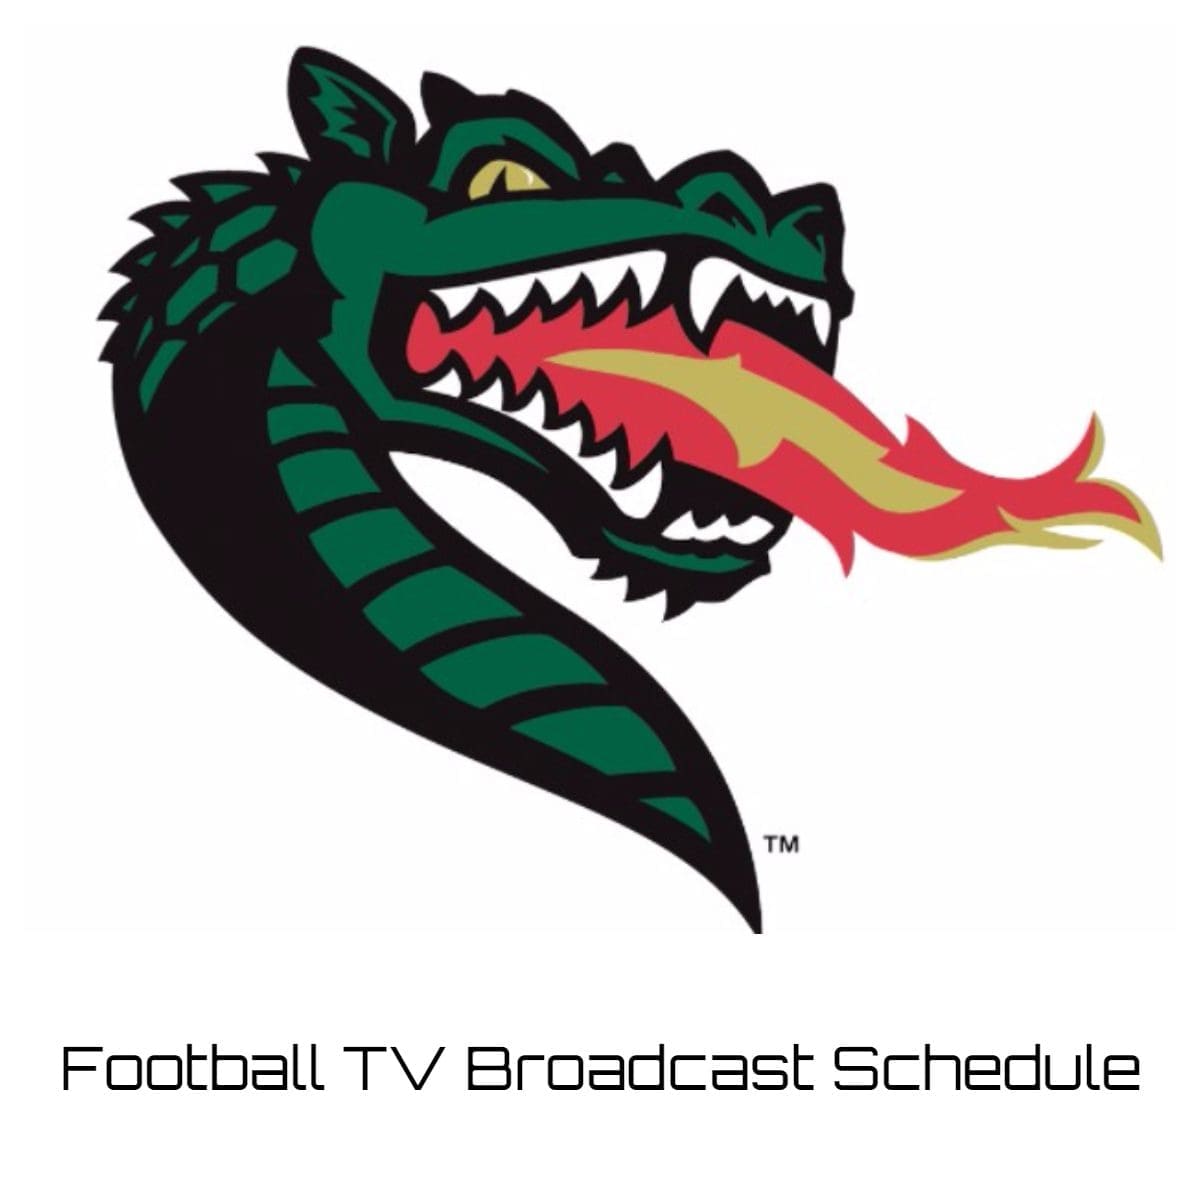 UAB Blazers Football TV Broadcast Schedule